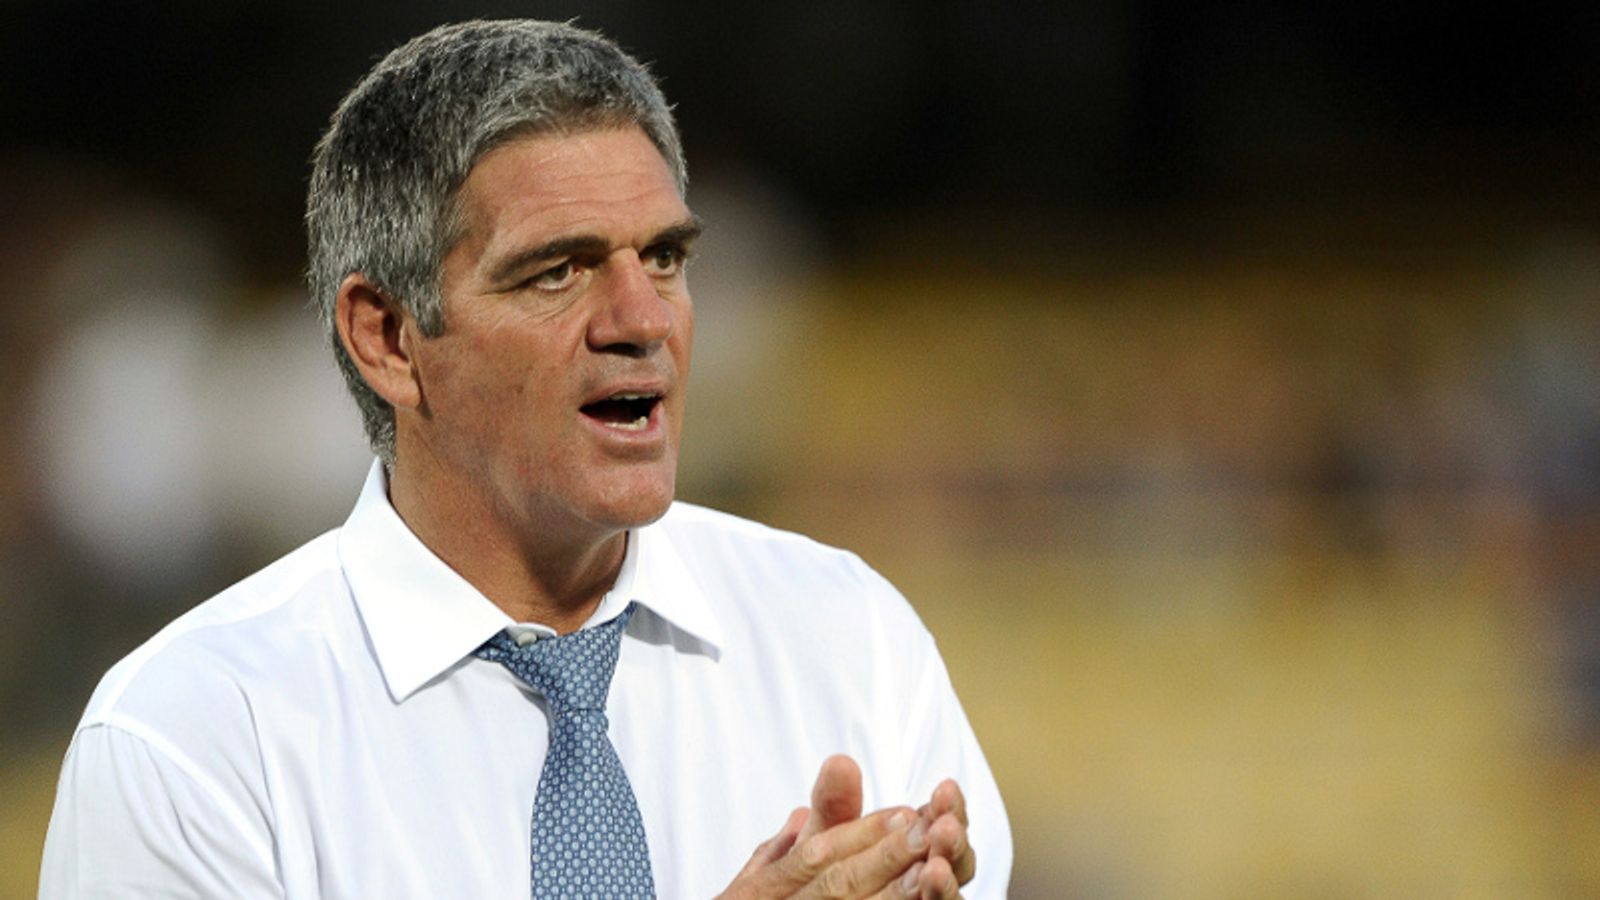 Mallett focuses on positives | Rugby Union News | Sky Sports